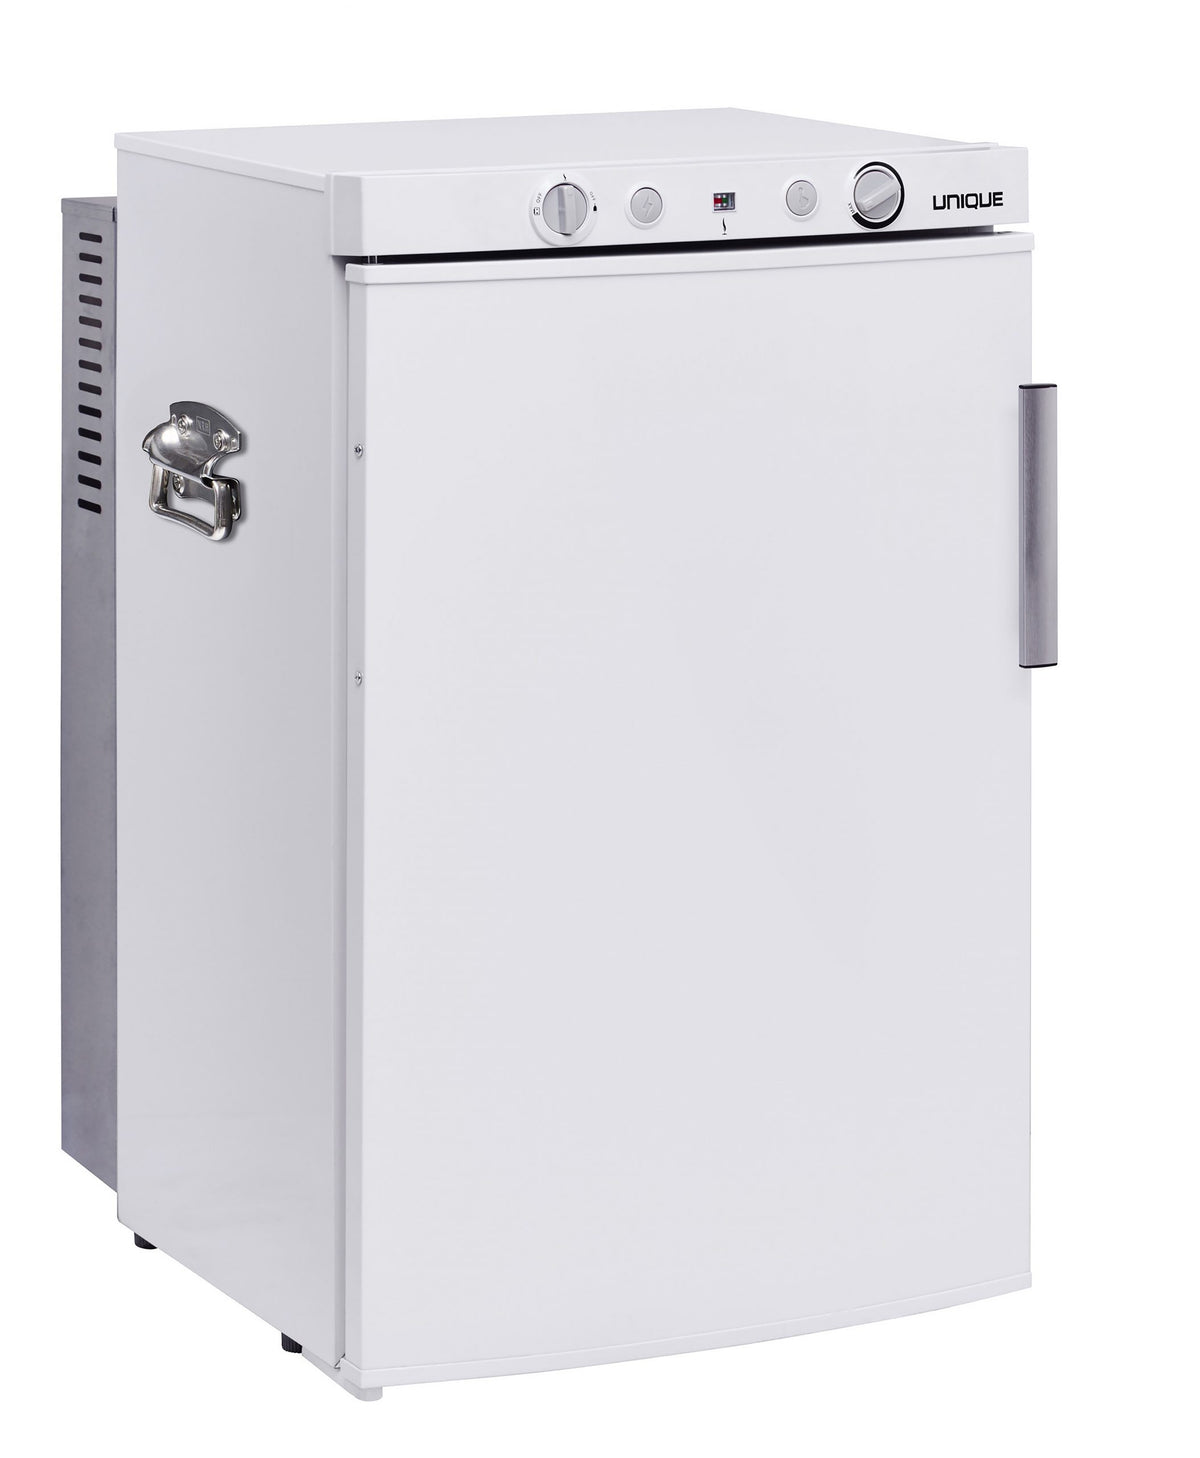 Unique 3 cu/ft white propane Refrigerator